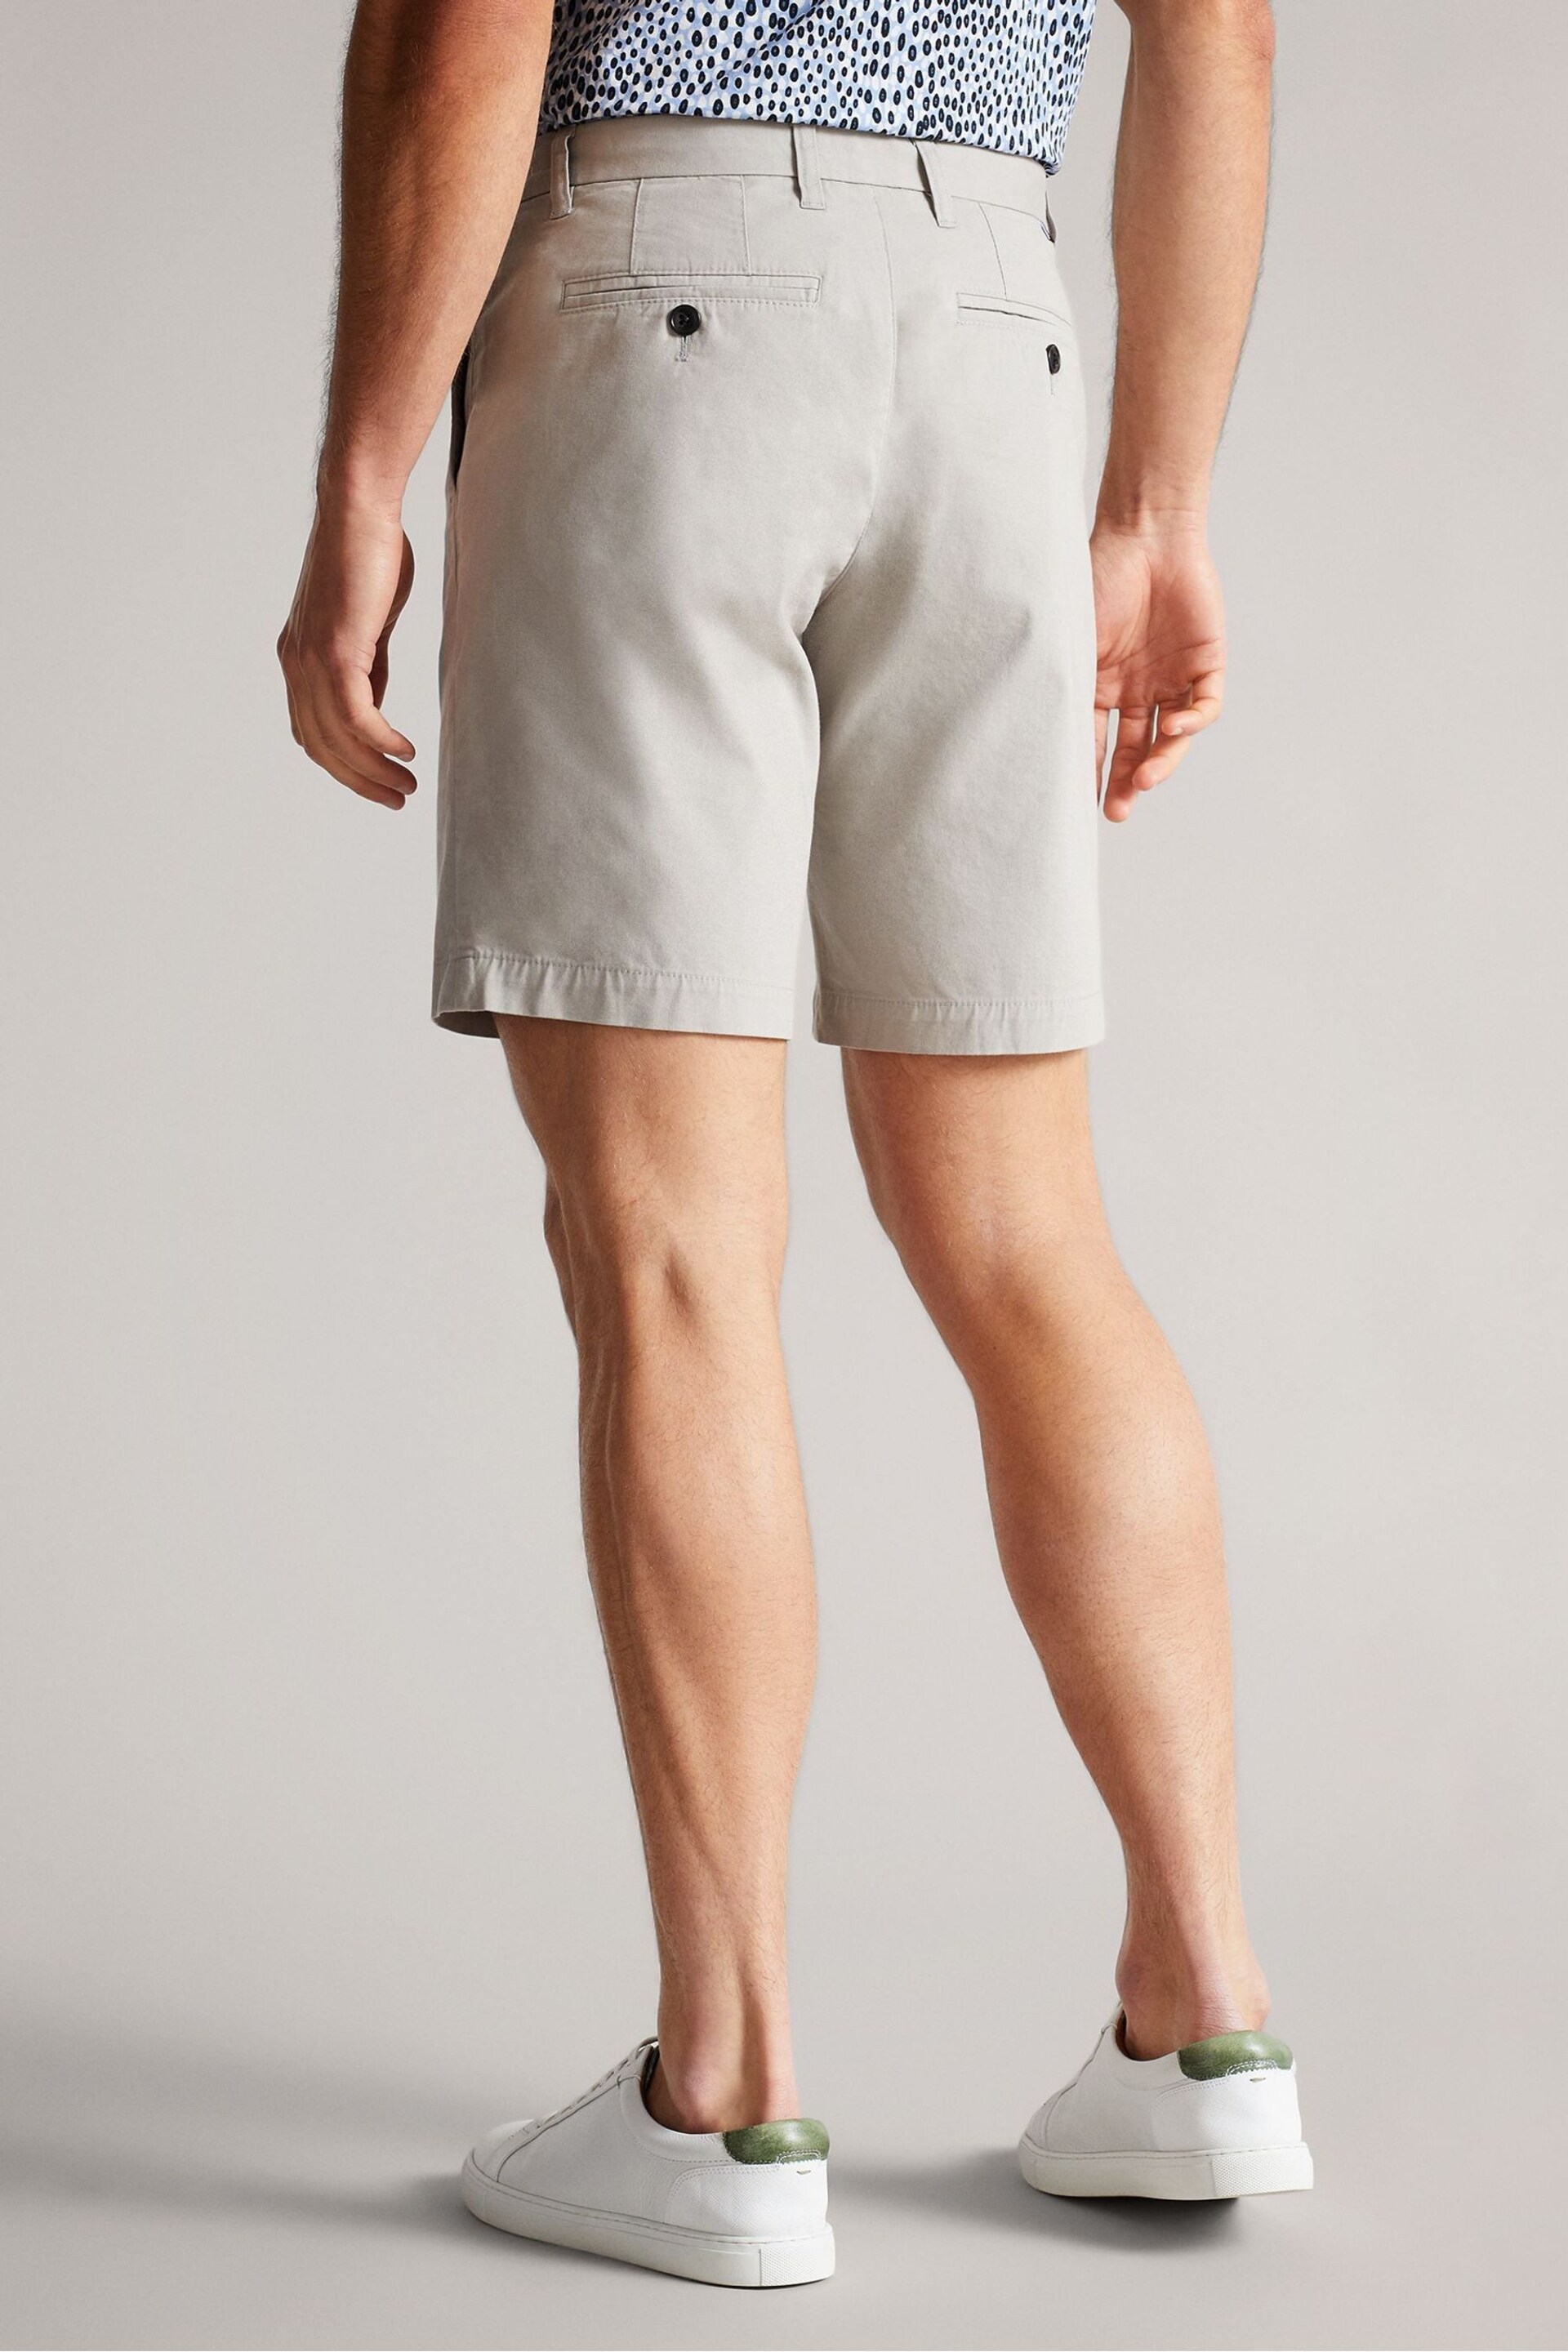 Ted Baker Grey Ashfrd Chino Shorts - Image 2 of 5